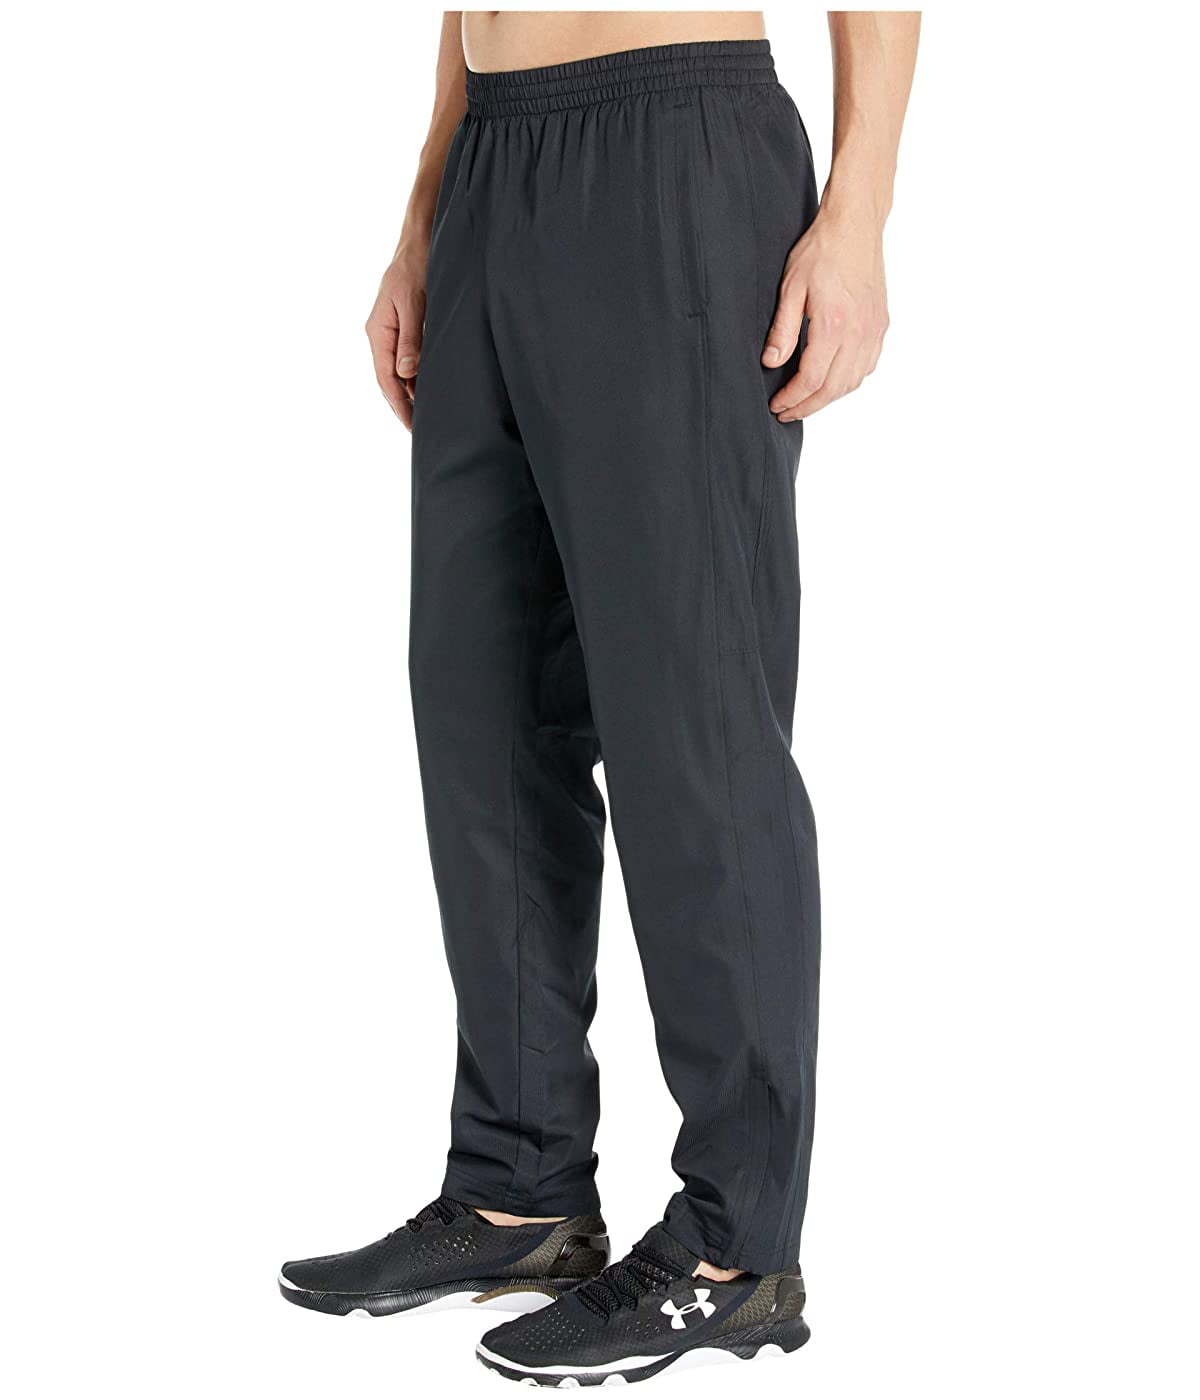 NWT: Under Armour Men's Big & Tall Black Vital Woven Warm-Up Pants